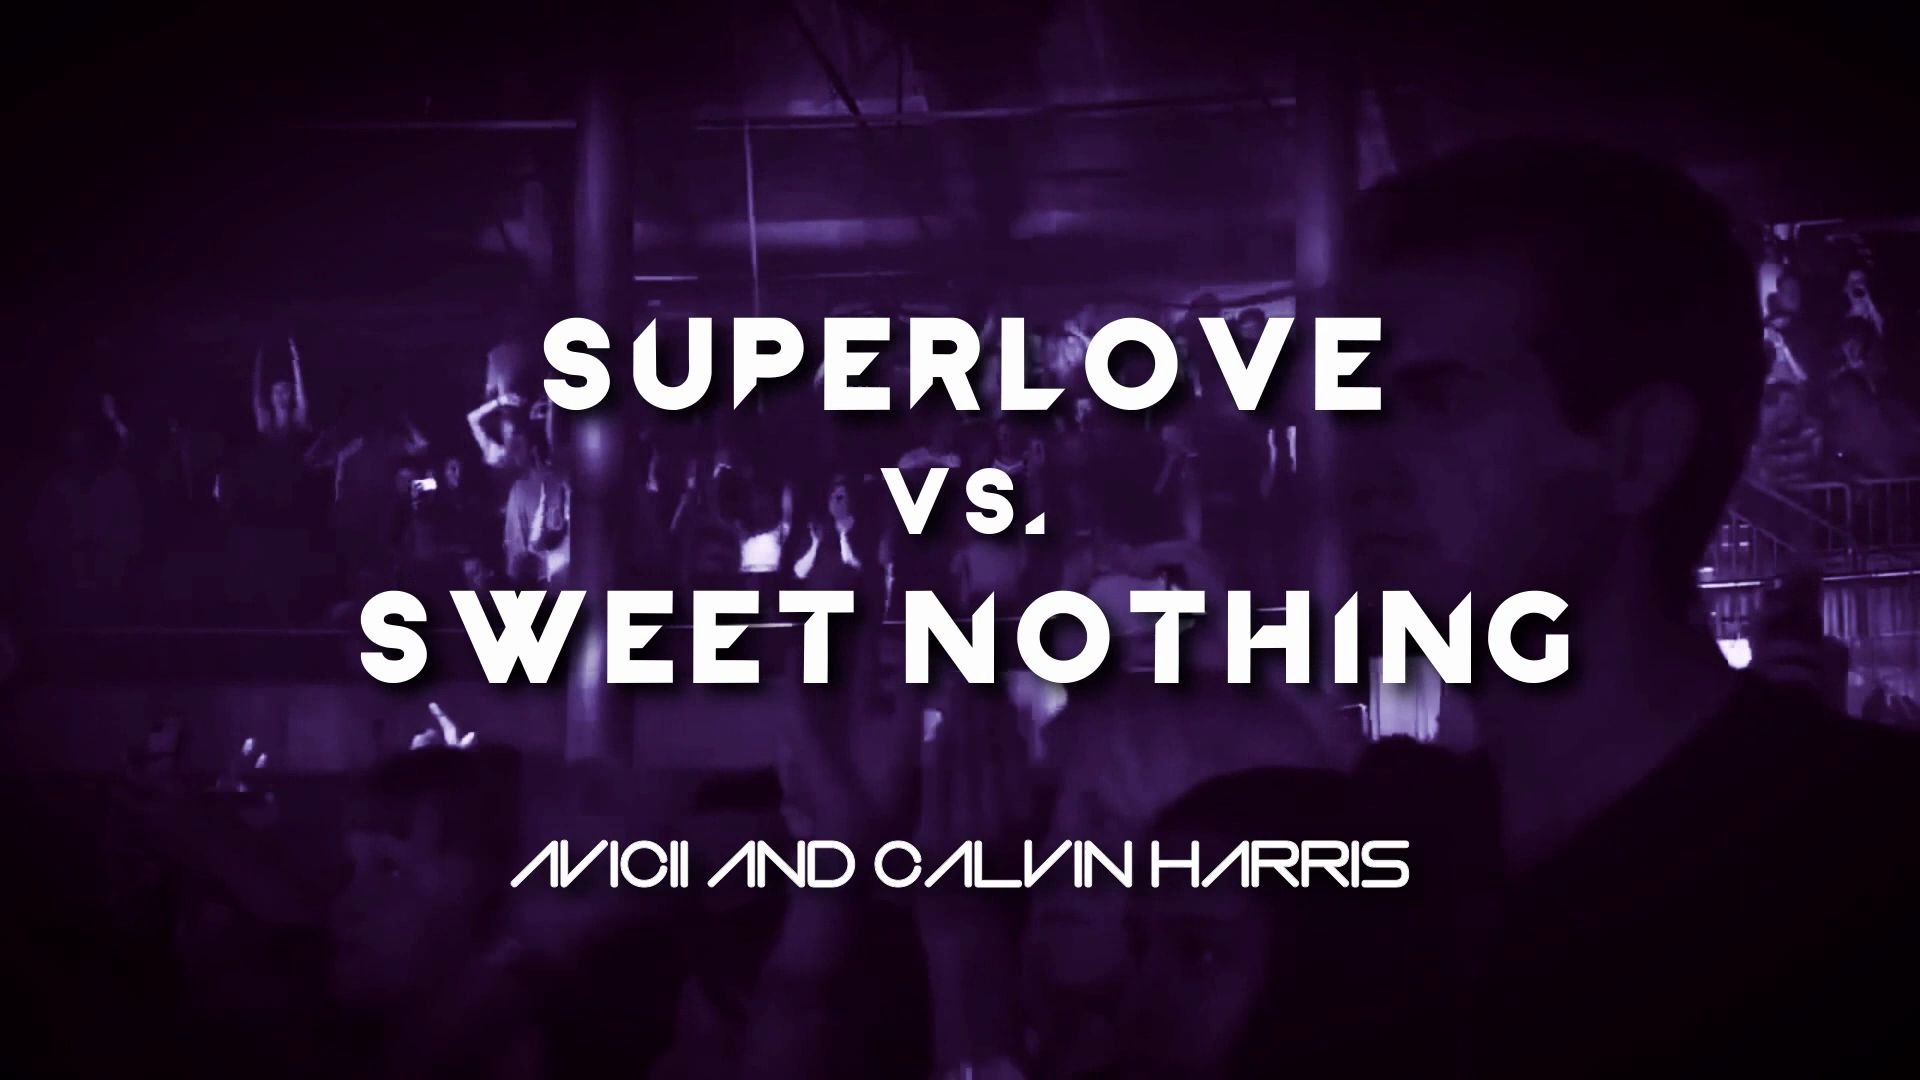 [图]Avicii & Calvin Harris - Superlove Vs. Sweet Nothing (Lyric Video)